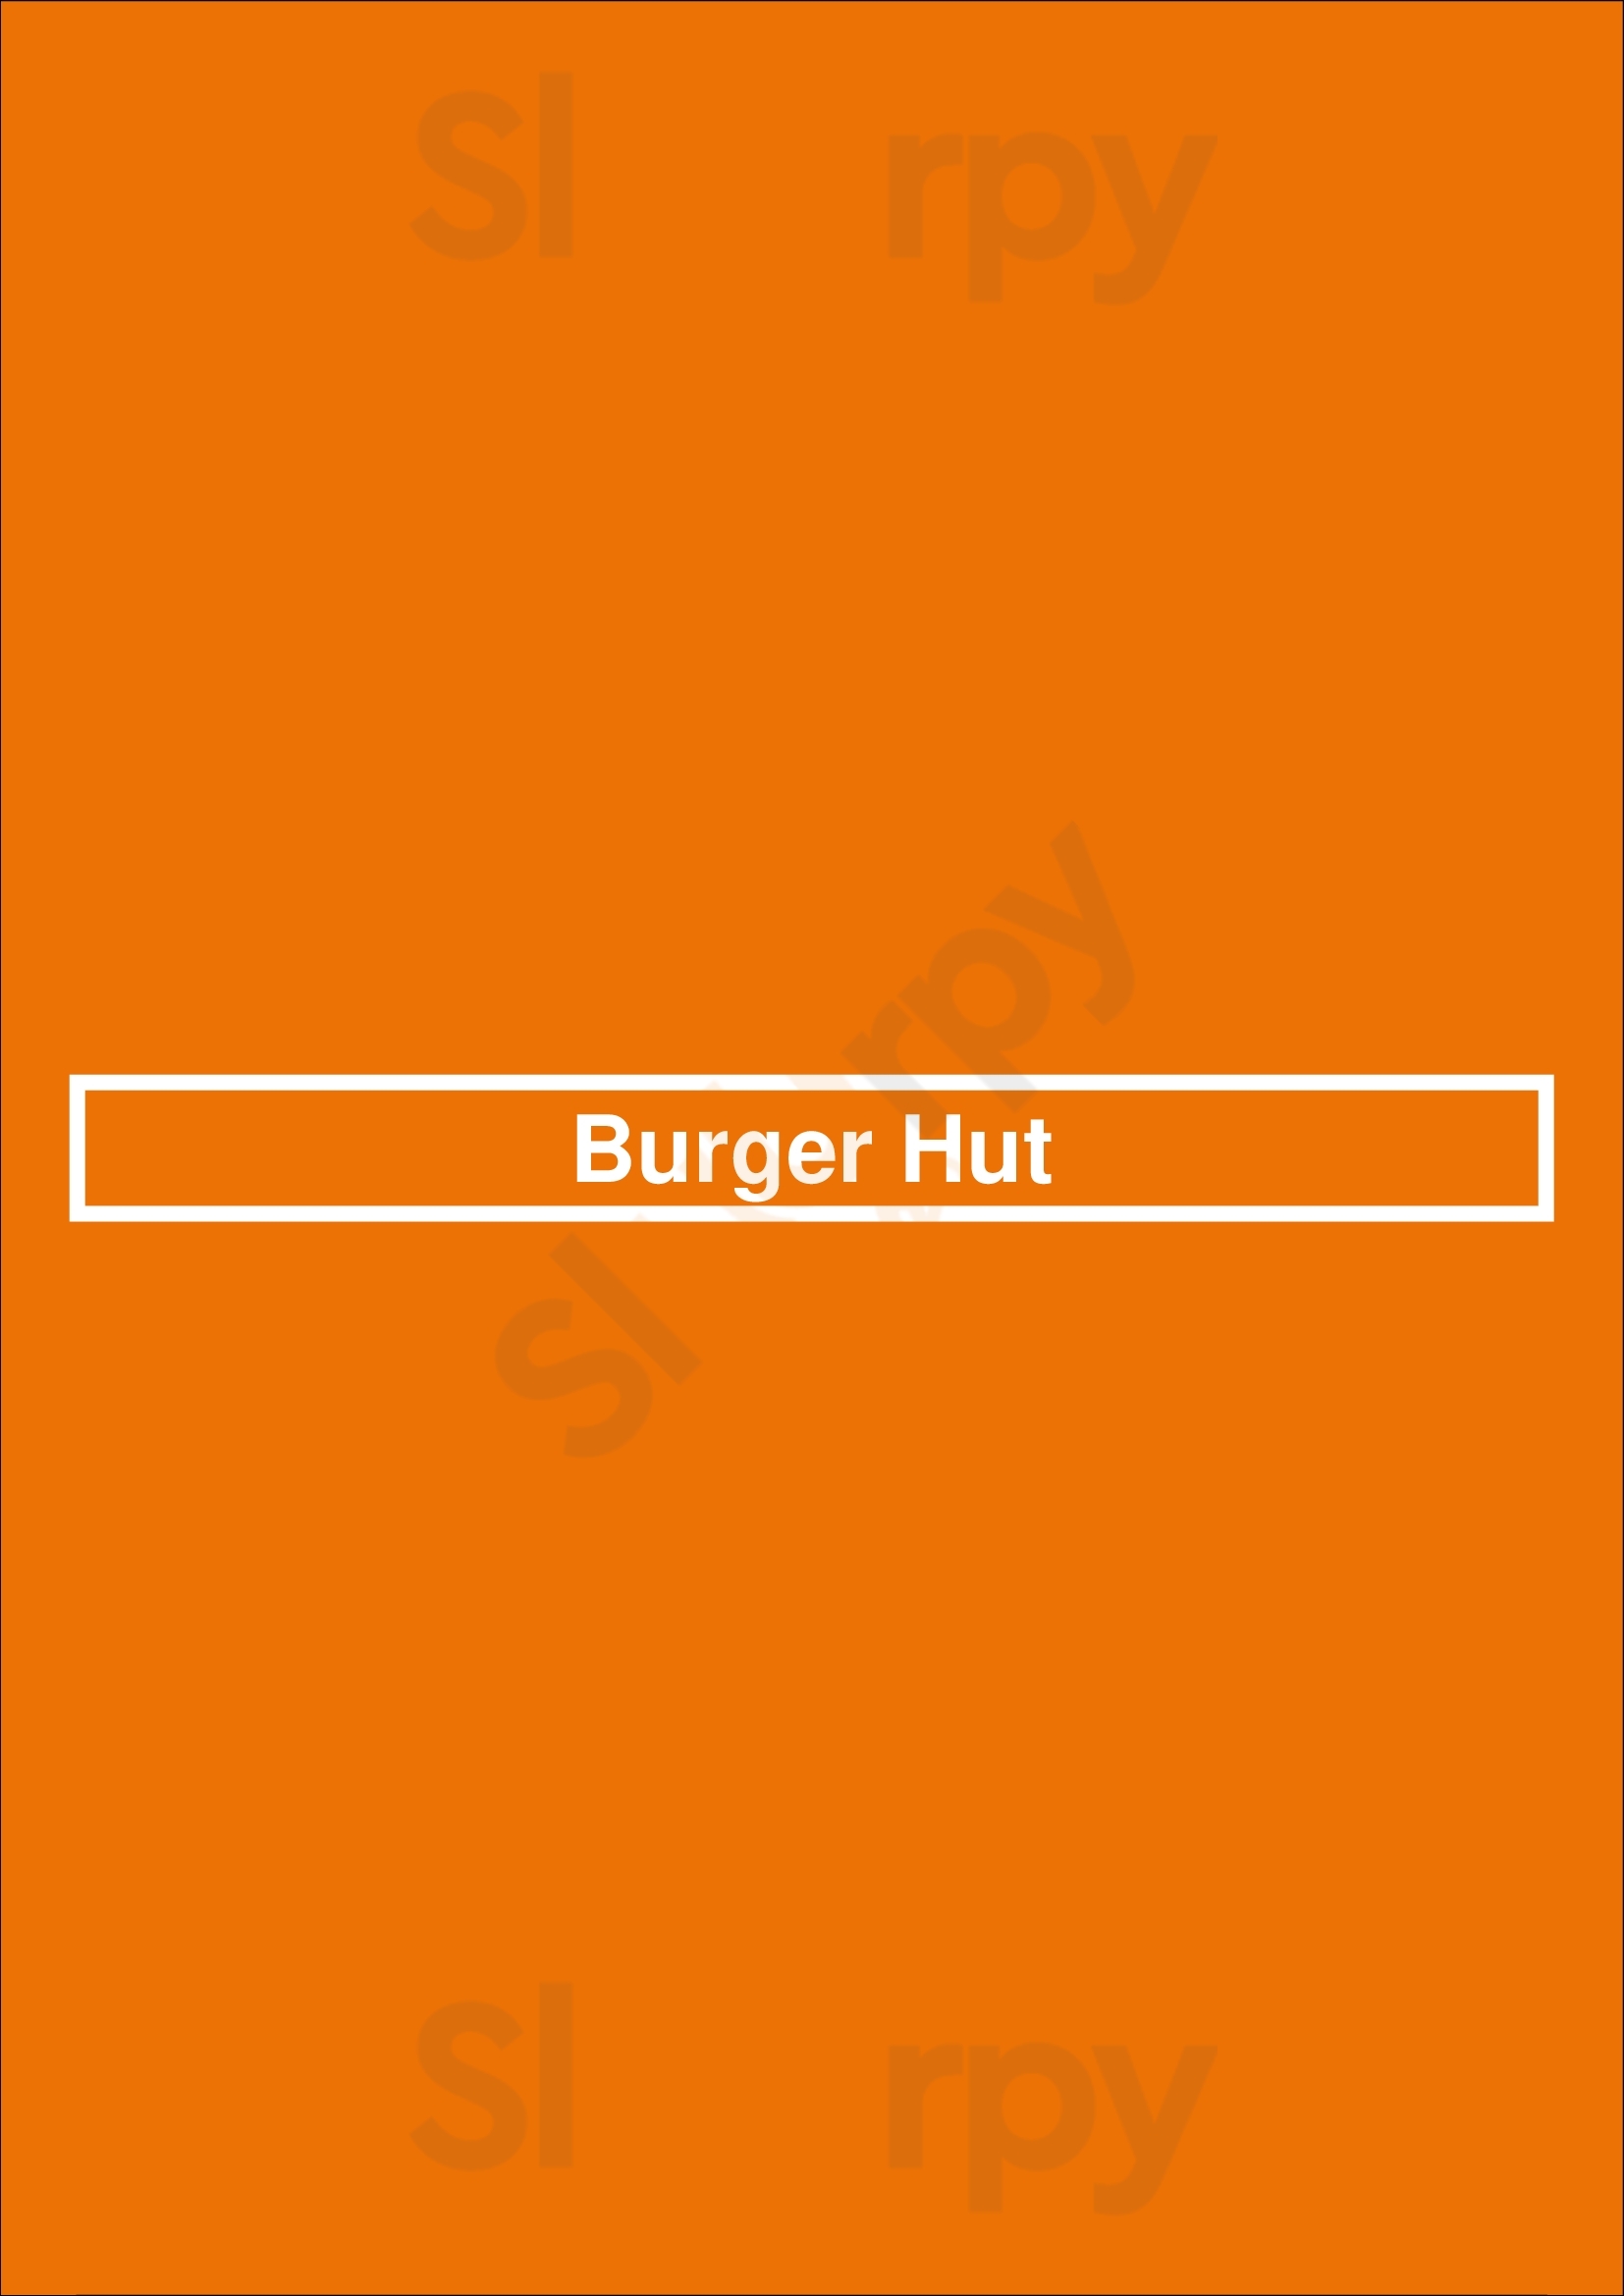 Burger Hut Birmingham Menu - 1